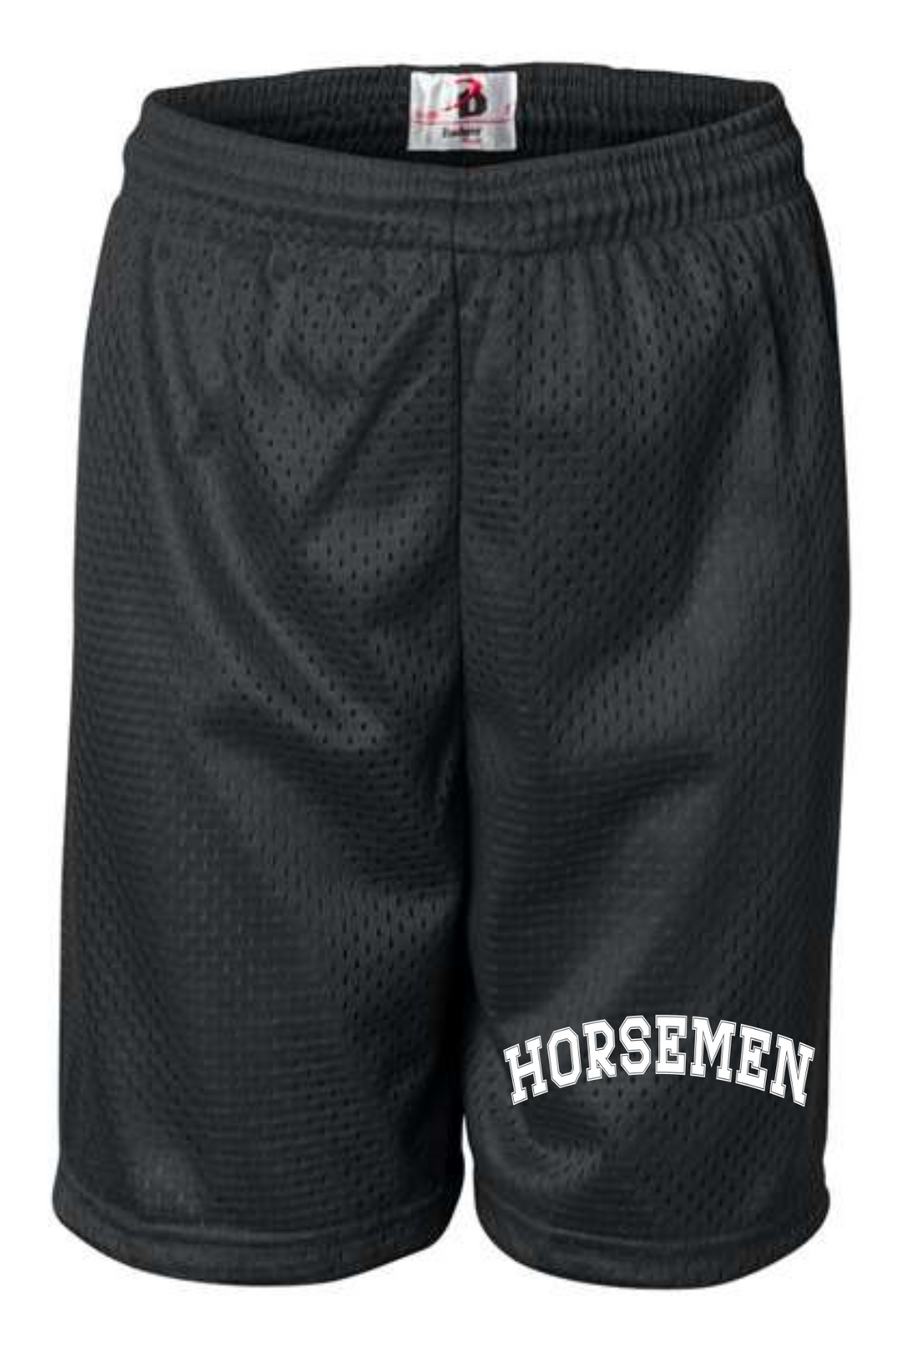 Sleepy Hollow Horsemen PTA 2023/24 Spirit Wear On-Demand-Men's / Unsiex Pro Mesh 7-inch Inseam Shorts with Solid Liner